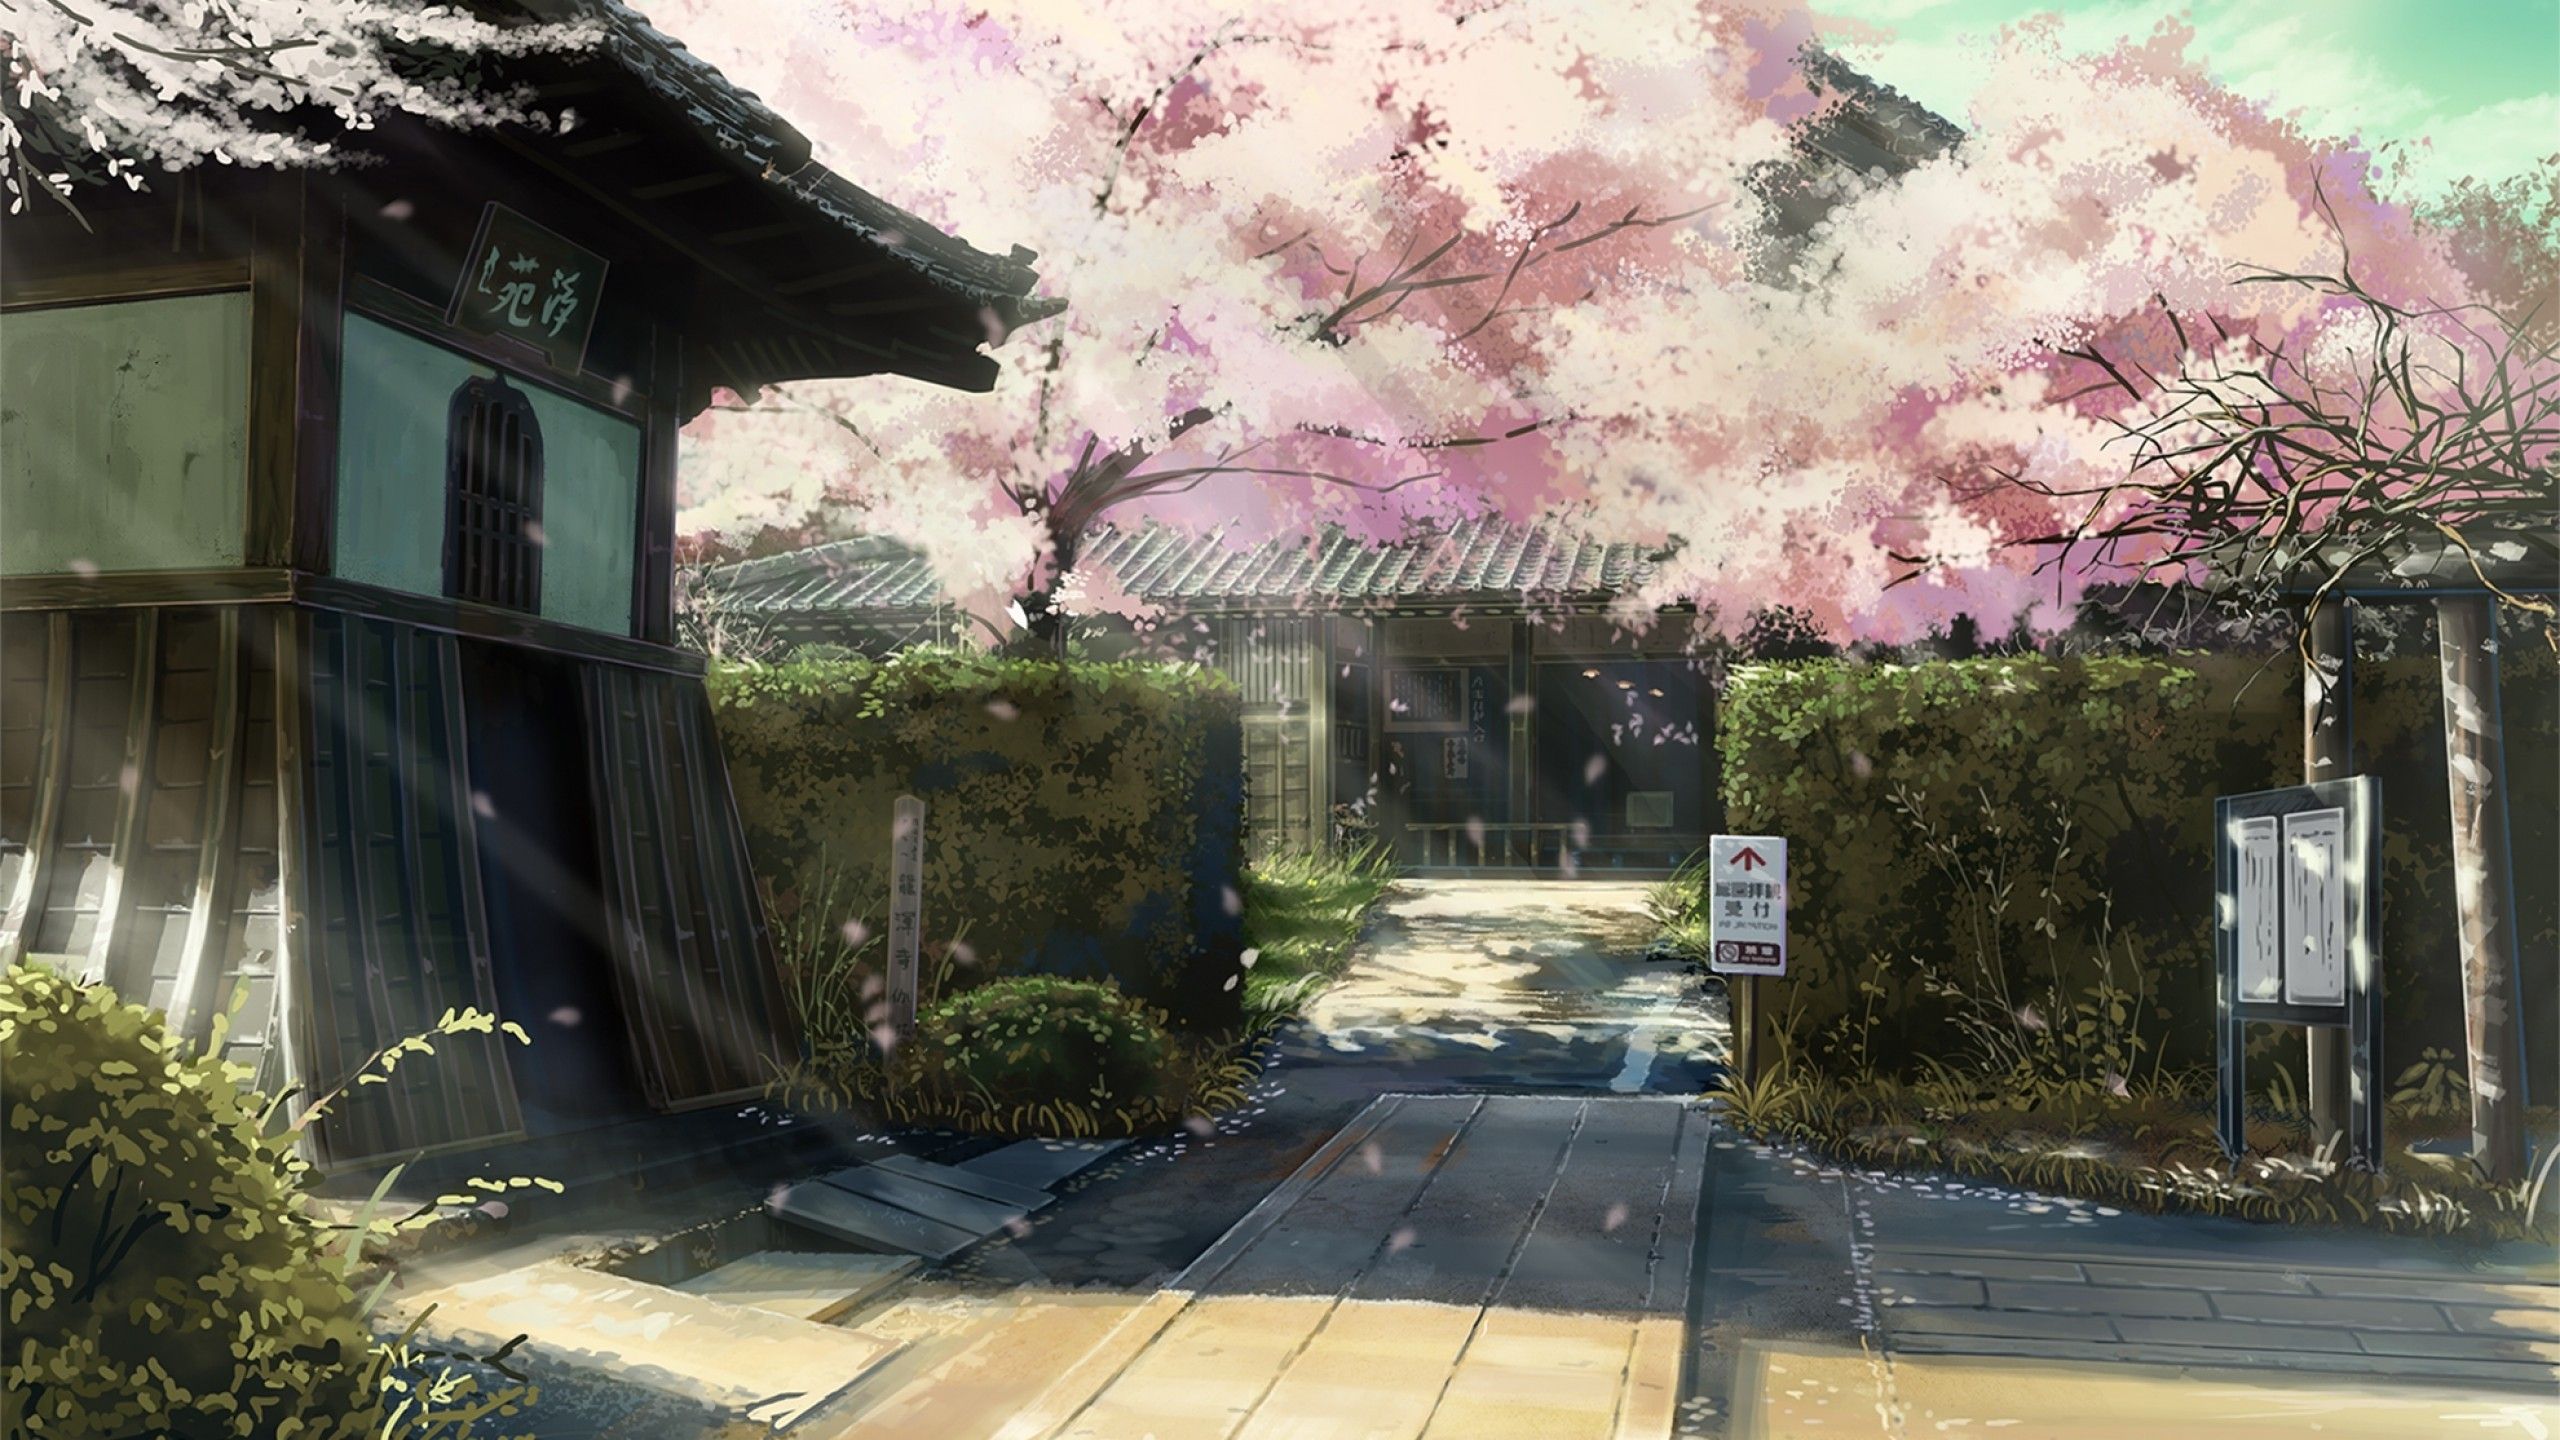 Download 2560x1440 Cherry Blossom, Scenic, Anime Houses, Sunlight Wallpaper for iMac 27 inch